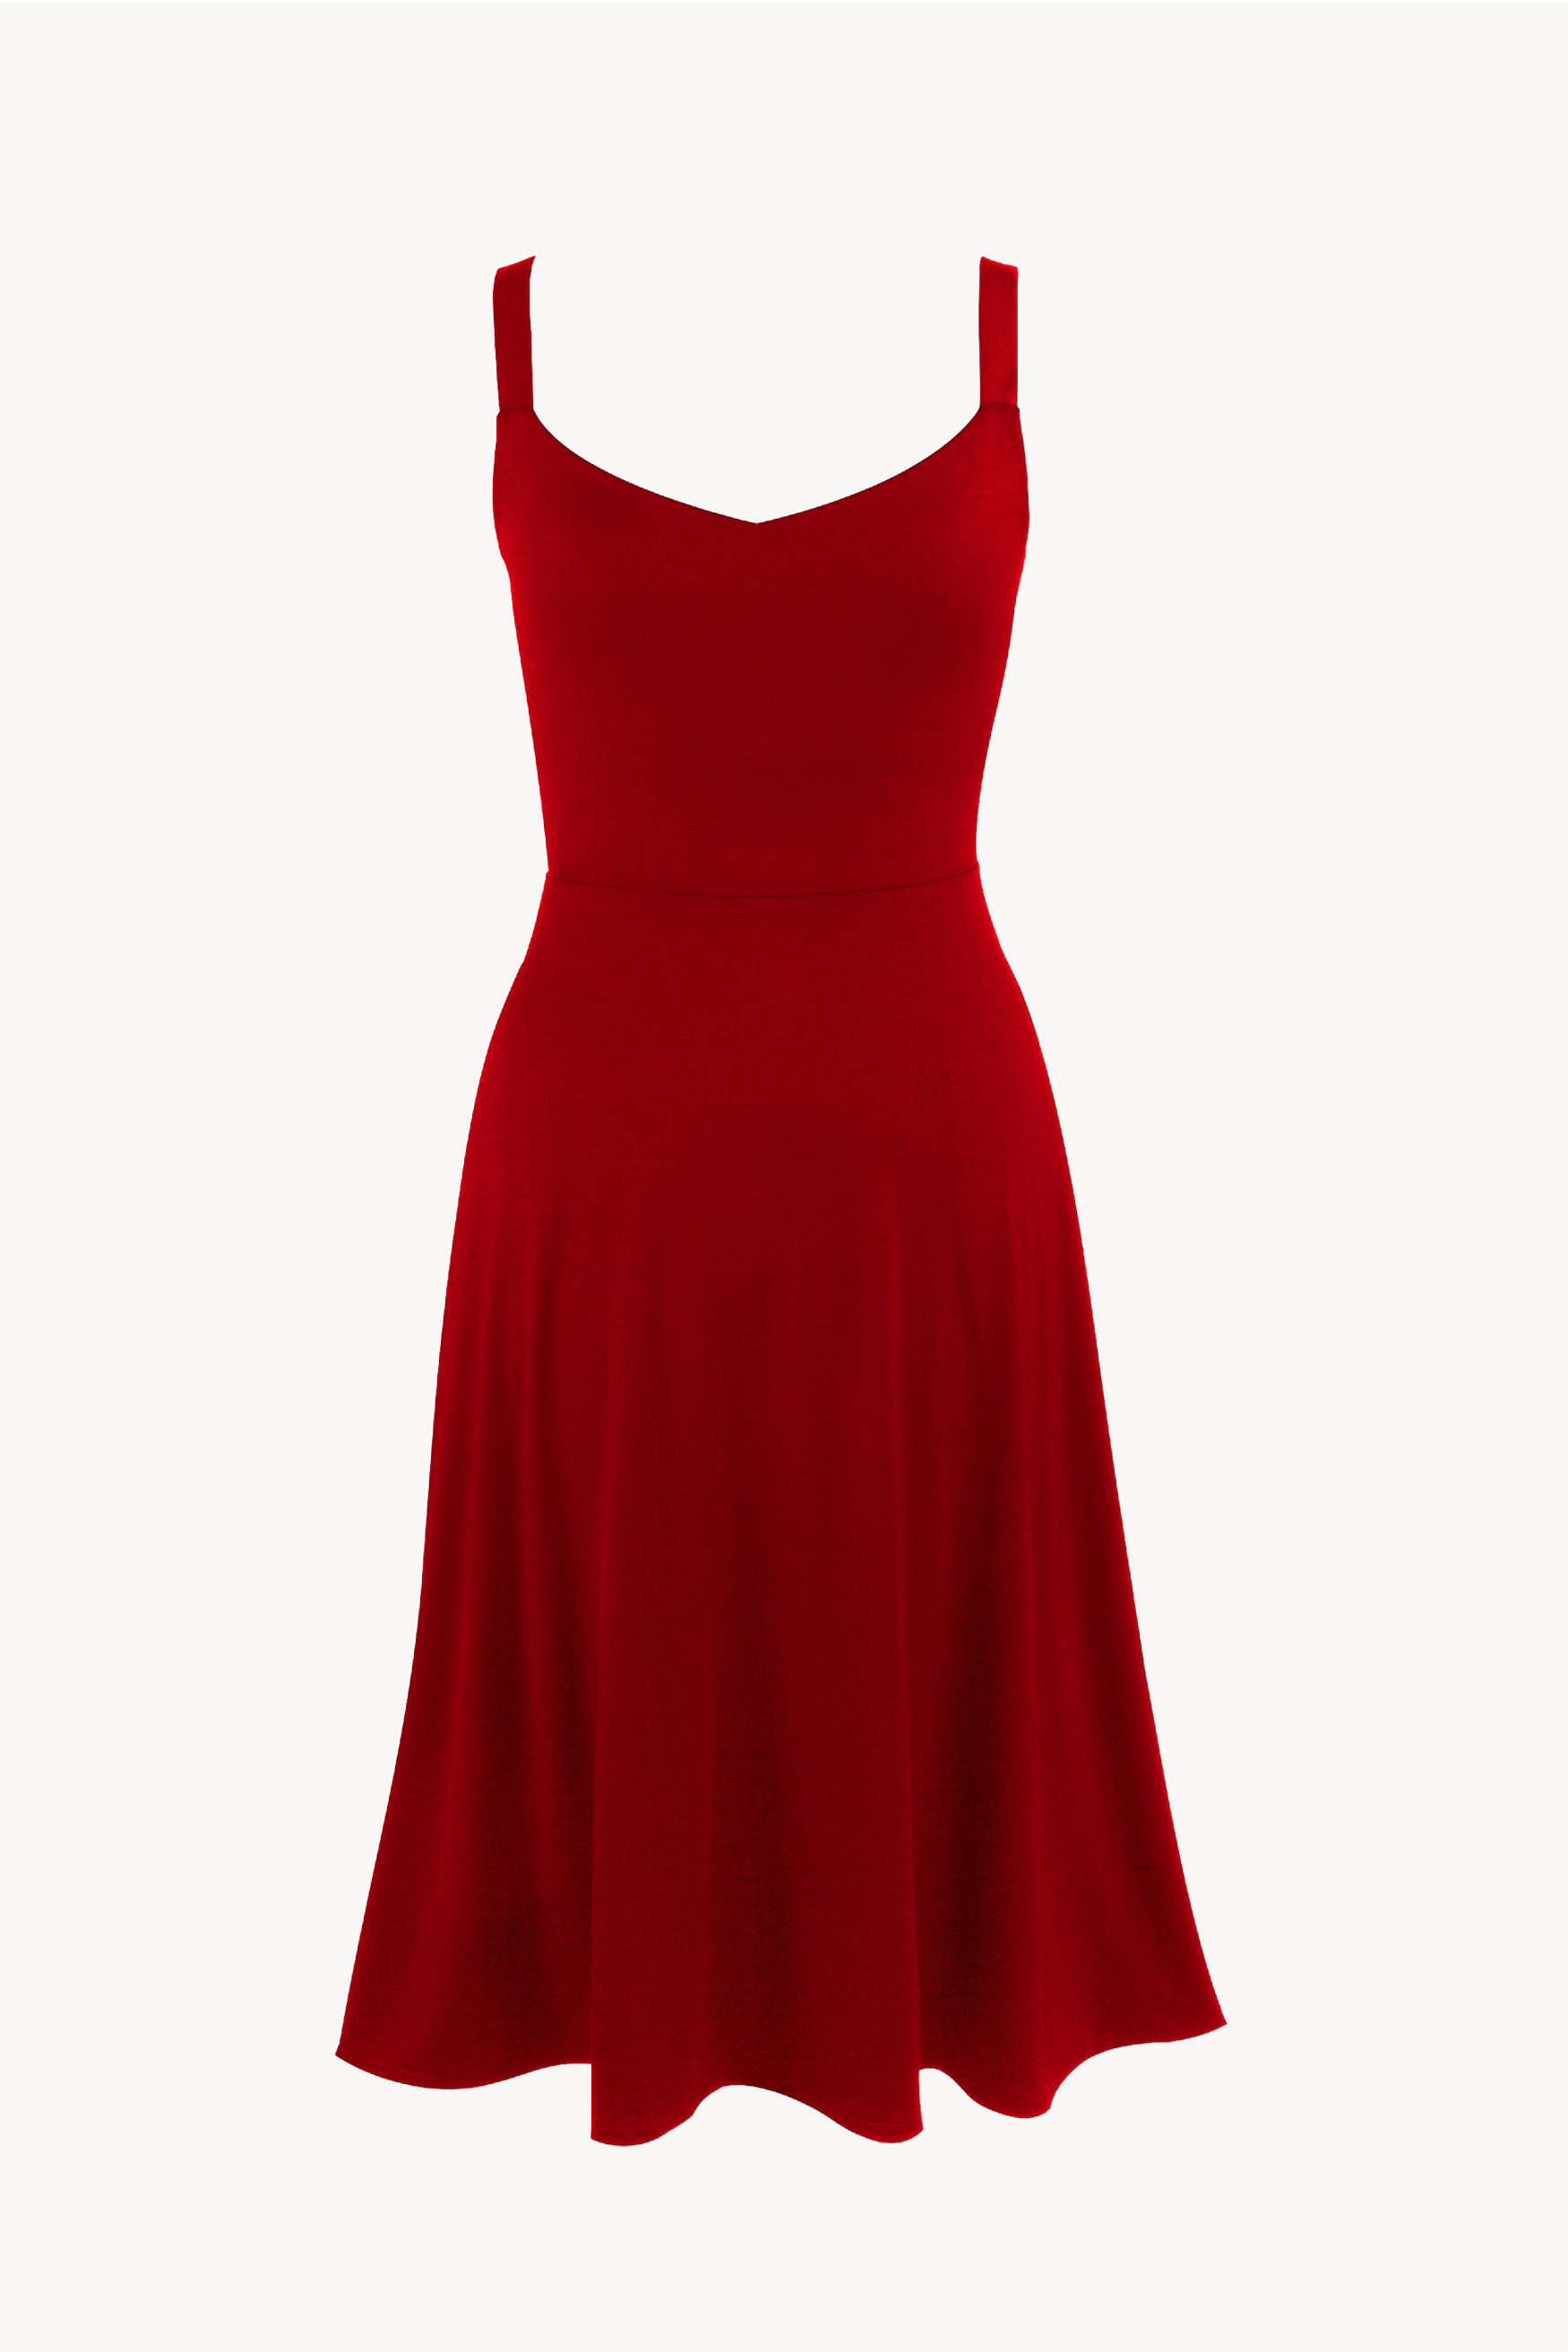 red a line dress